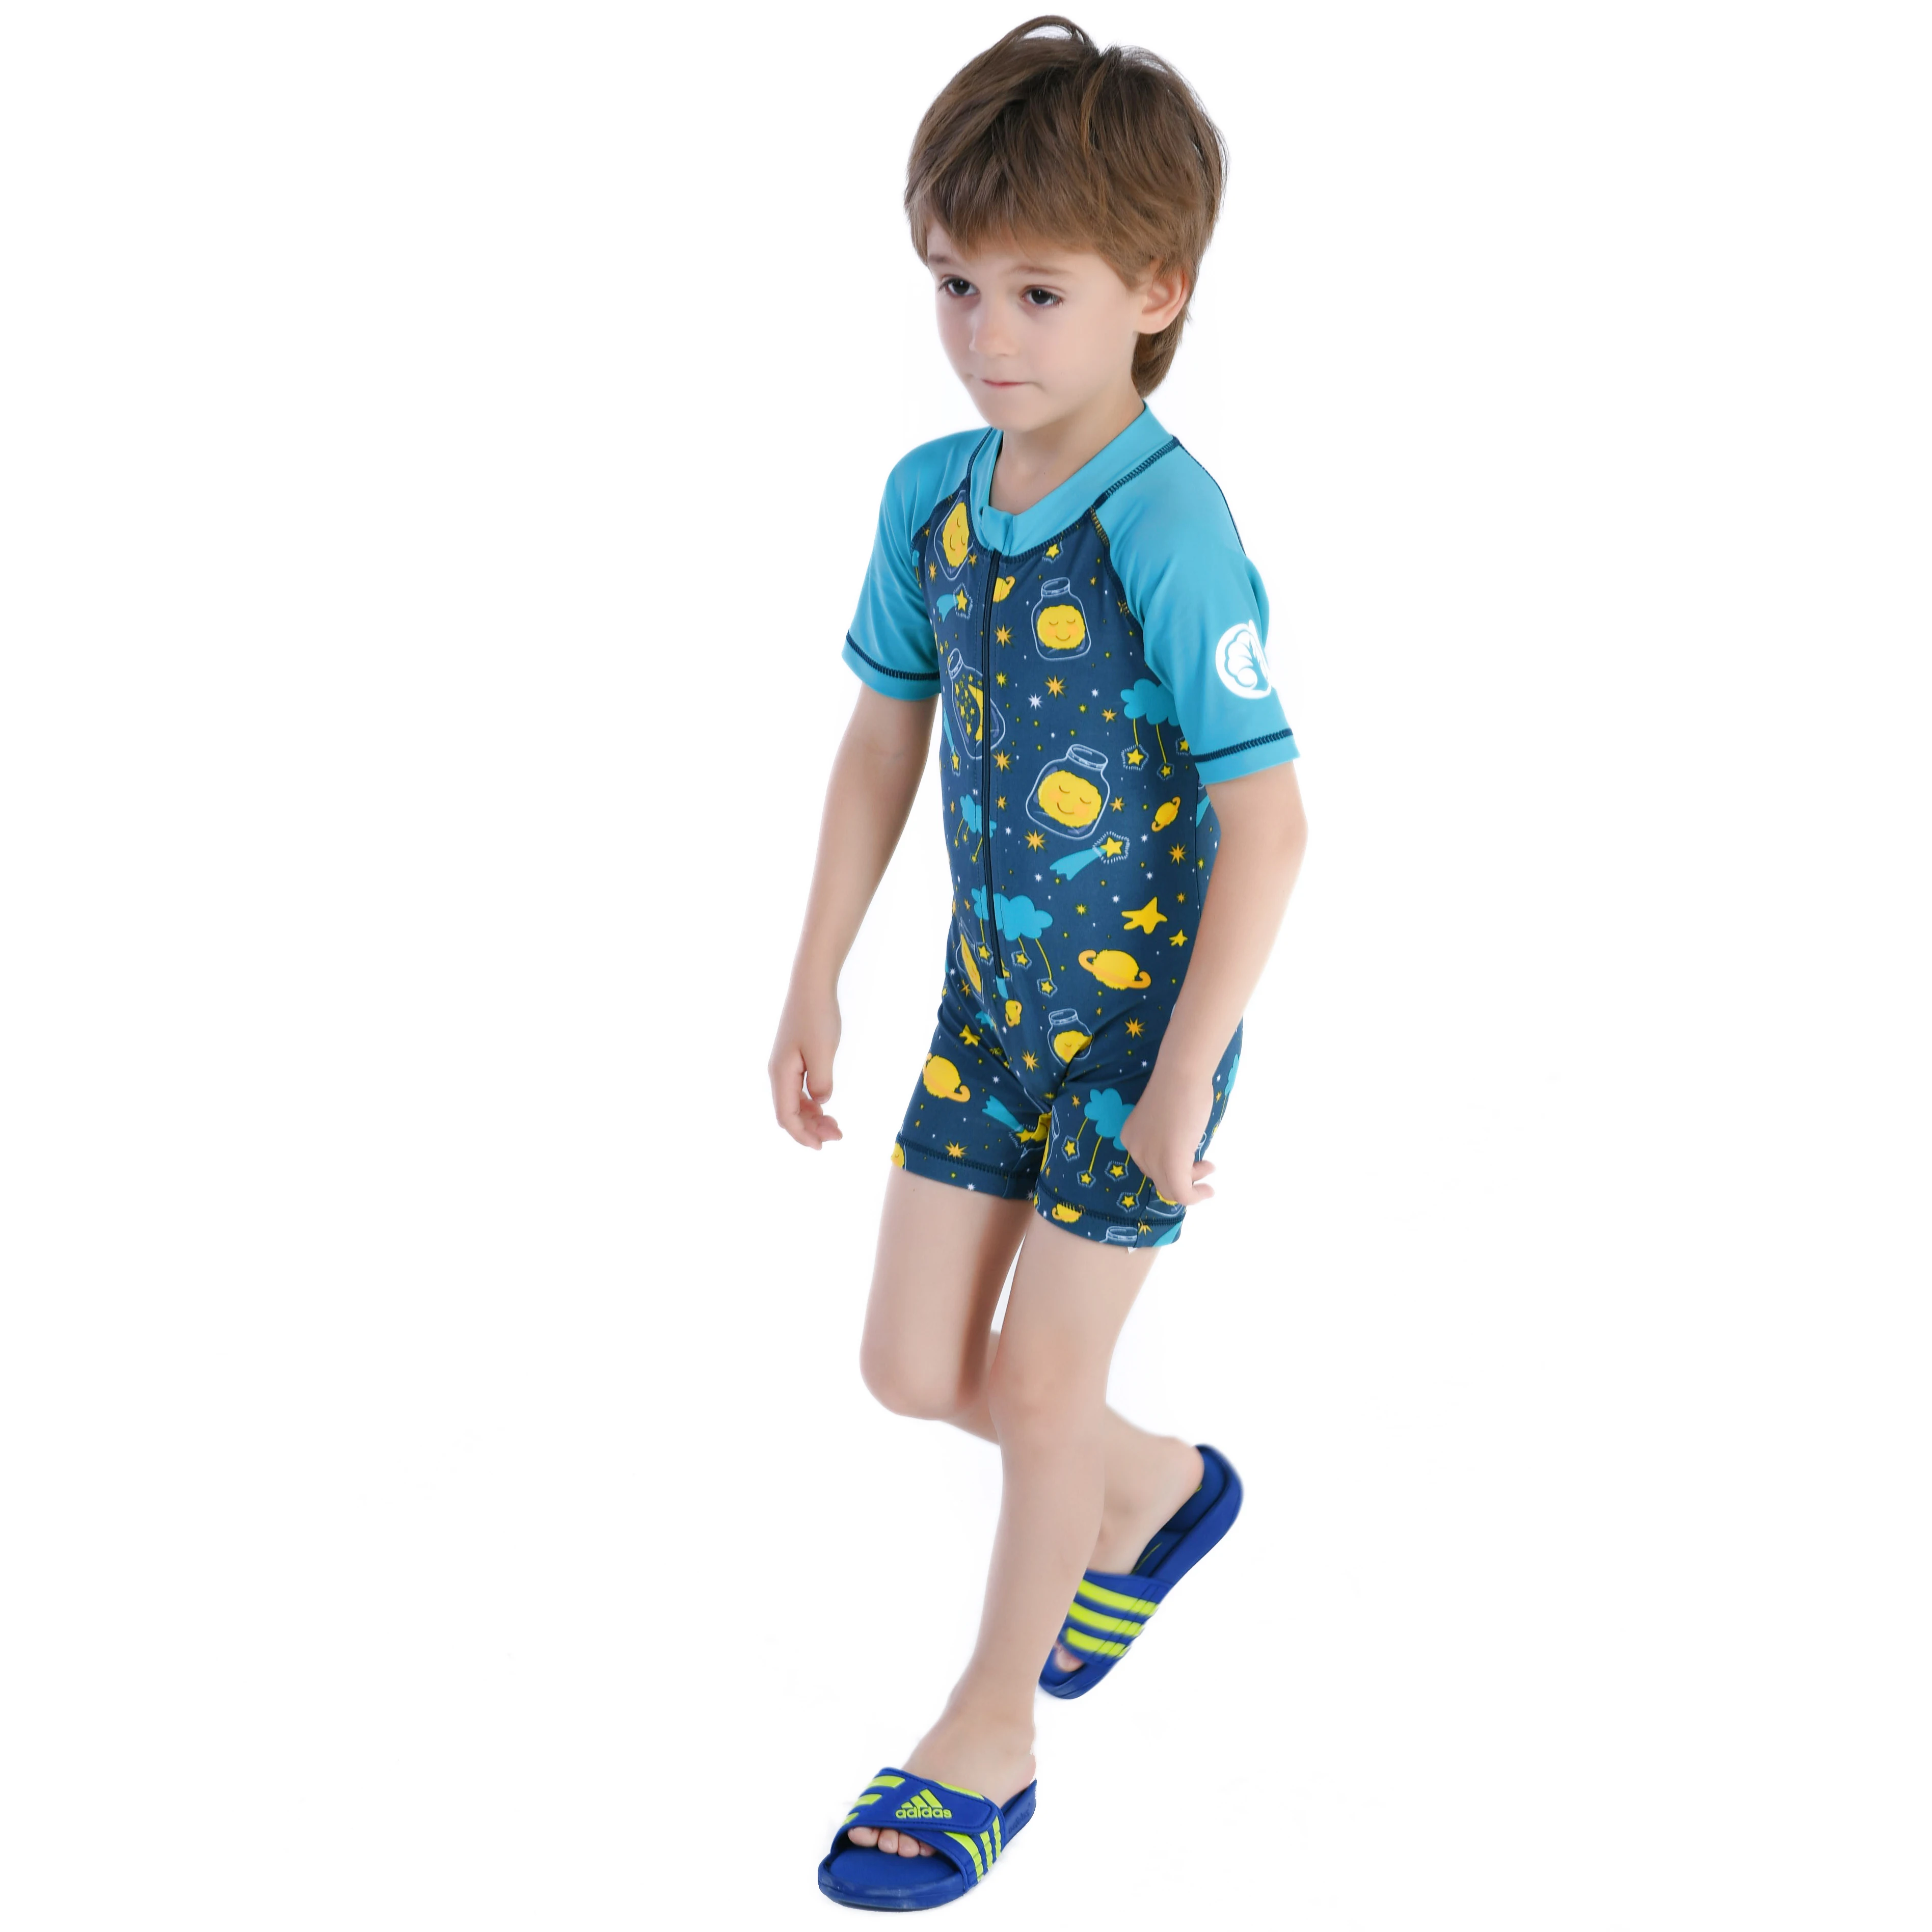 

Miniatree Baby Toddler Girls Zipper Rash Guard Swimsuit One Piece Swimwear Little Boys Bathing Suits Swim Wear Child Swimwear, Customized color